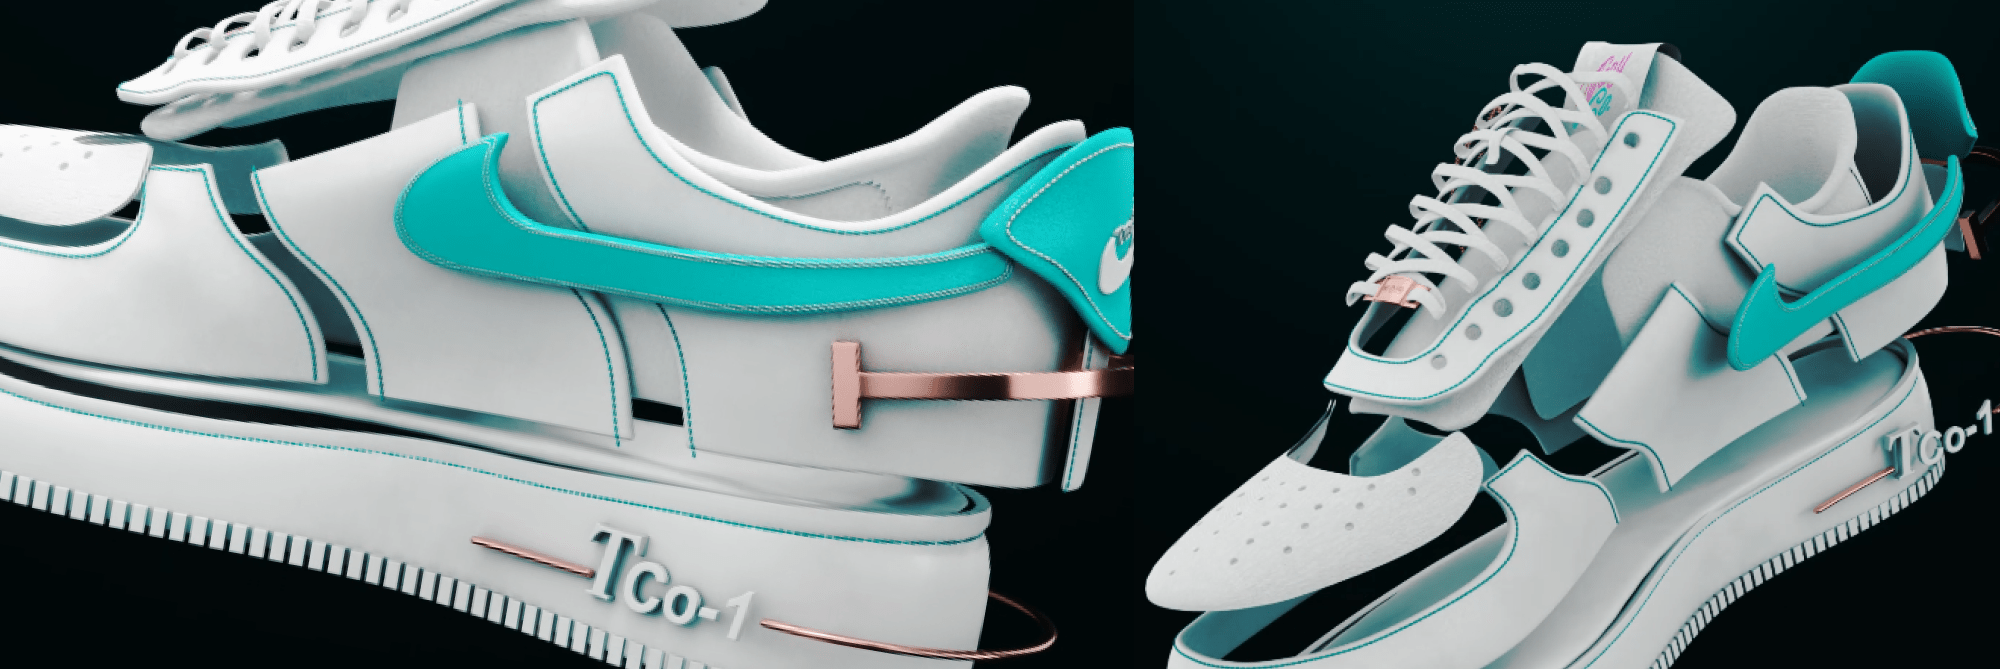 Nike x Tiffany réinventée : concept par Kevin Novitch